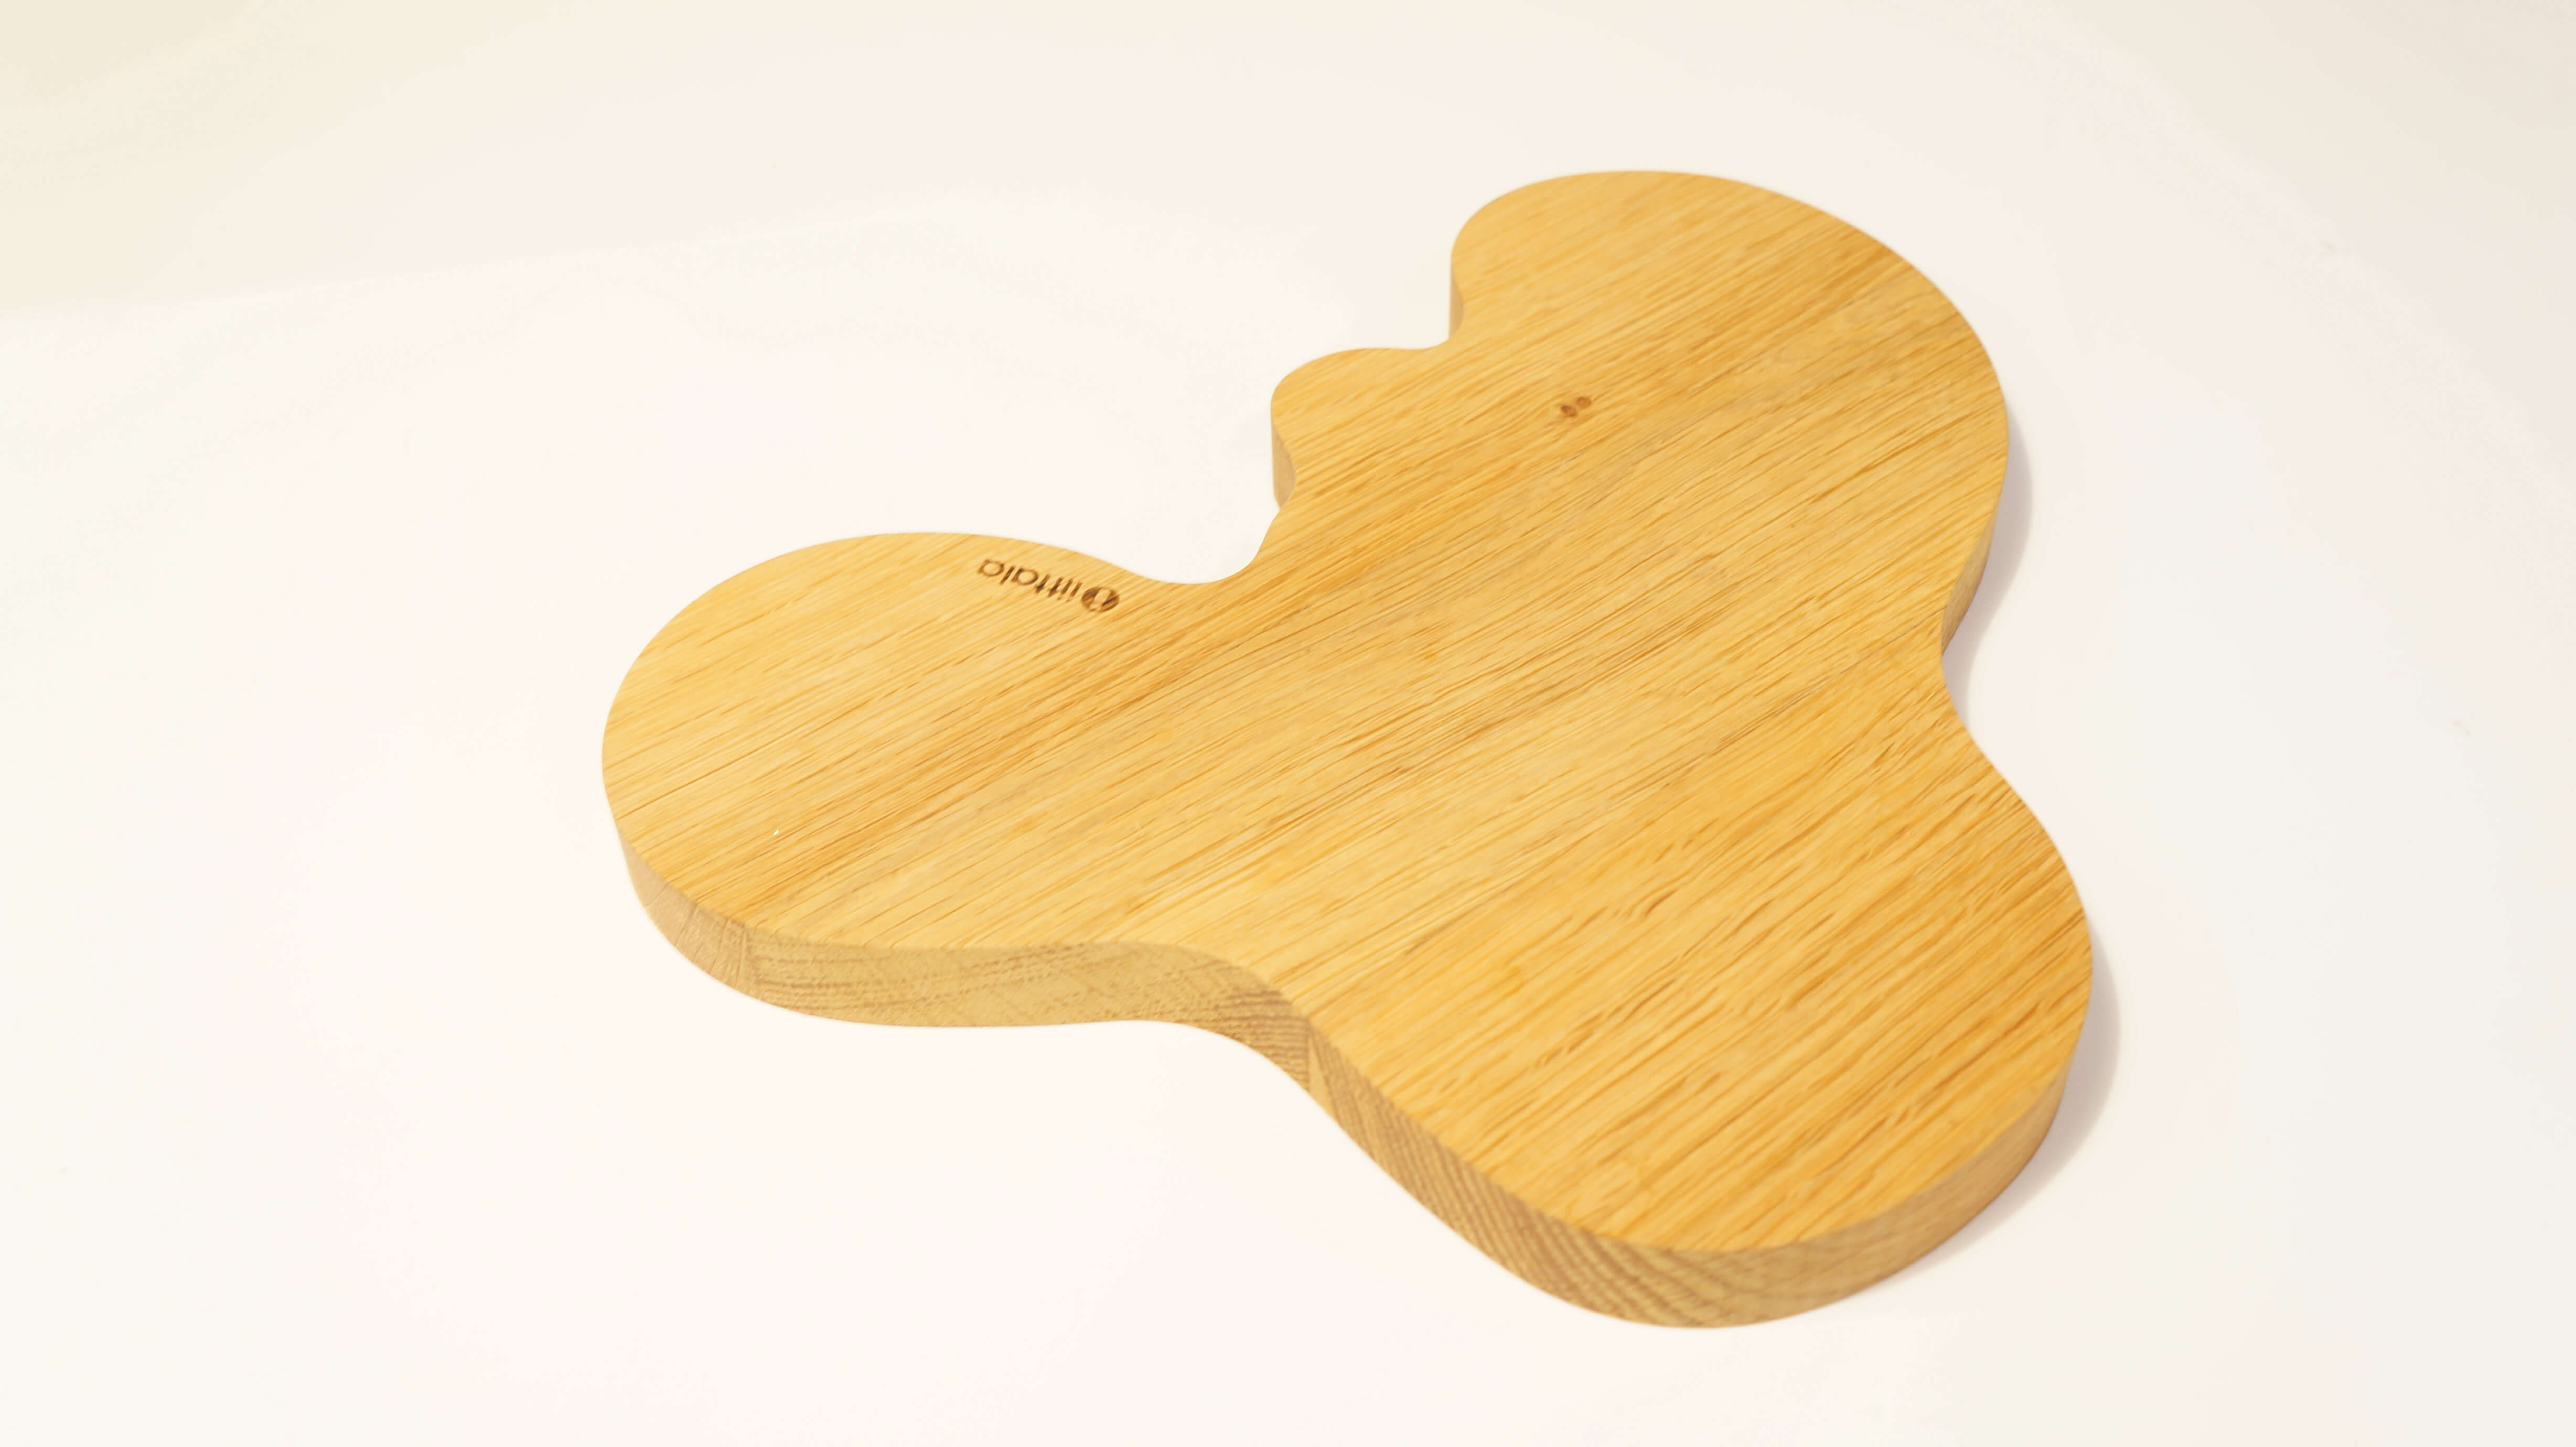 iittala Alvar Aalto Collection Serving Platter/イッタラ アルヴァ・アアルト コレクション 木製サービングプラター